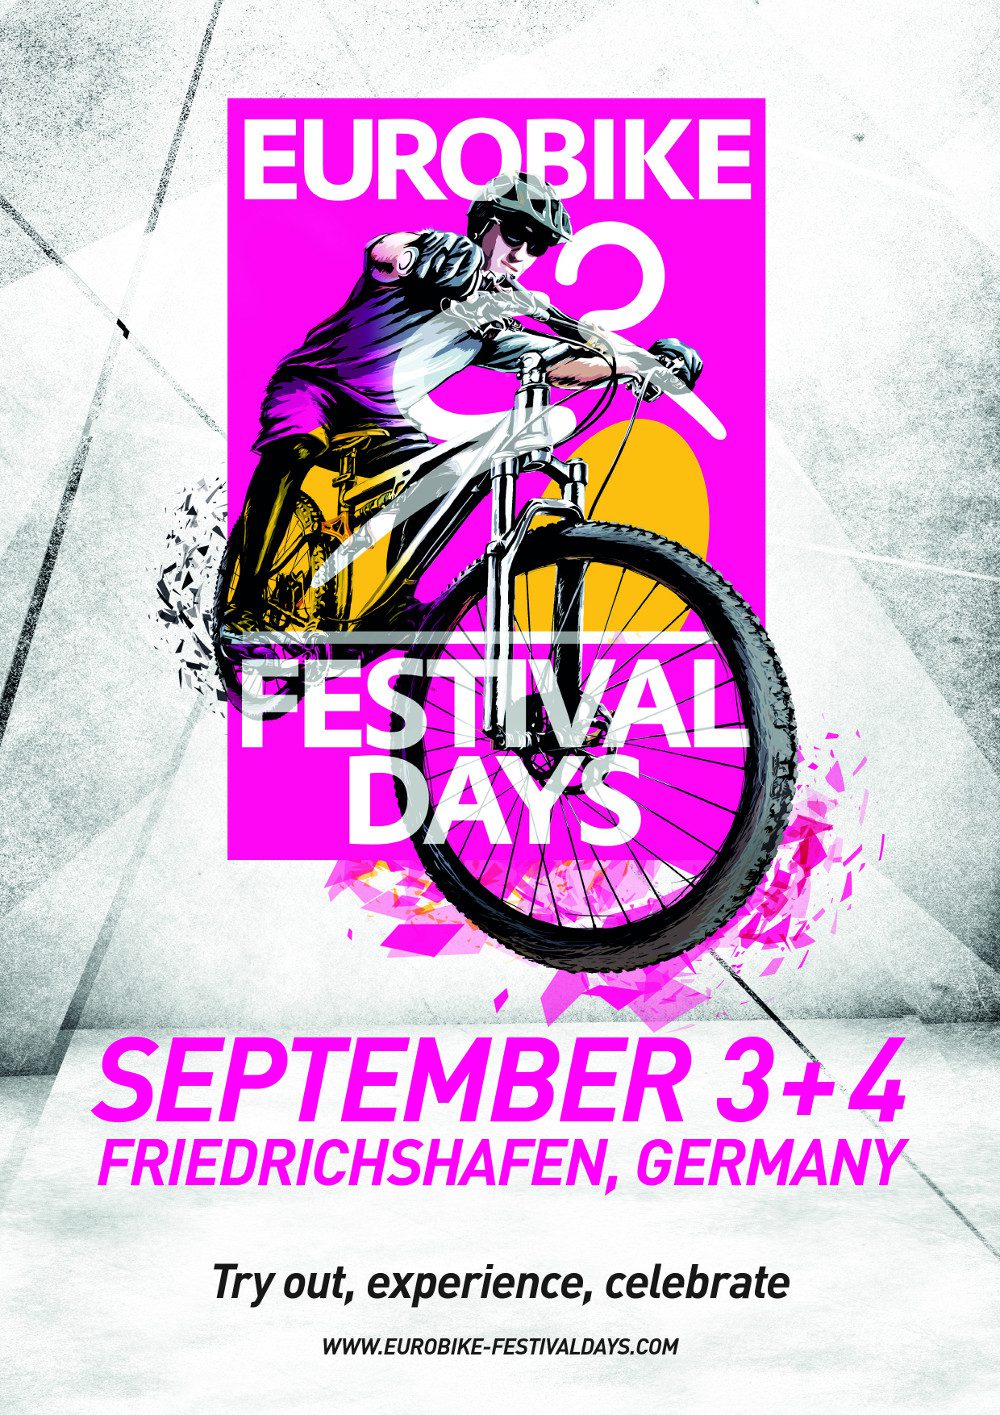 Eurobike Festival Days in Friedrichshafen